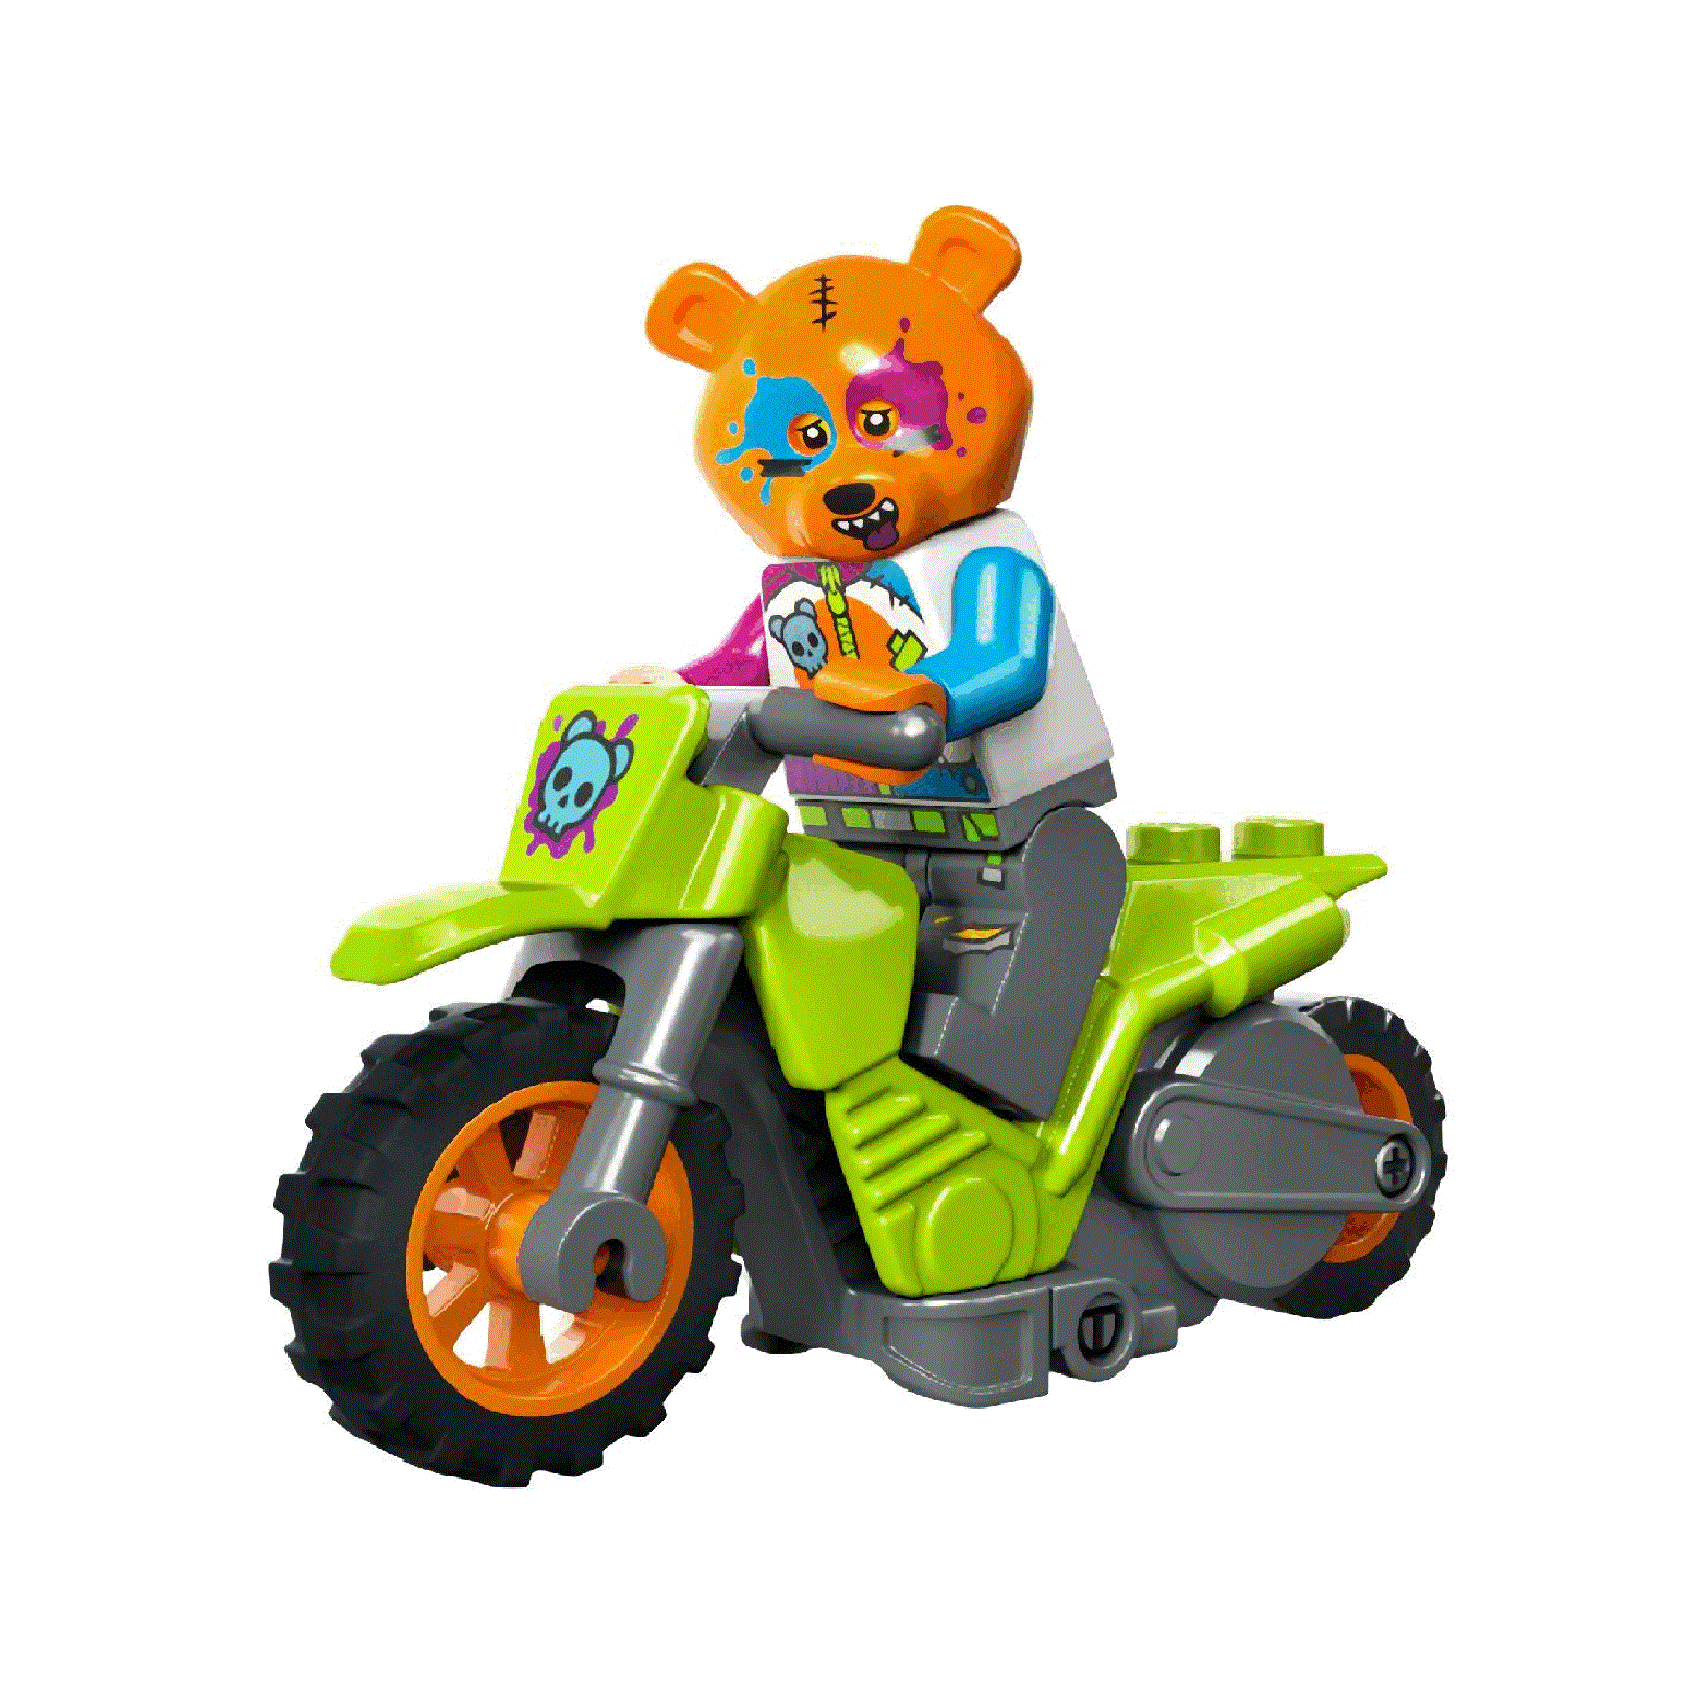 LEGO 60356 City Bear Stunt Bike